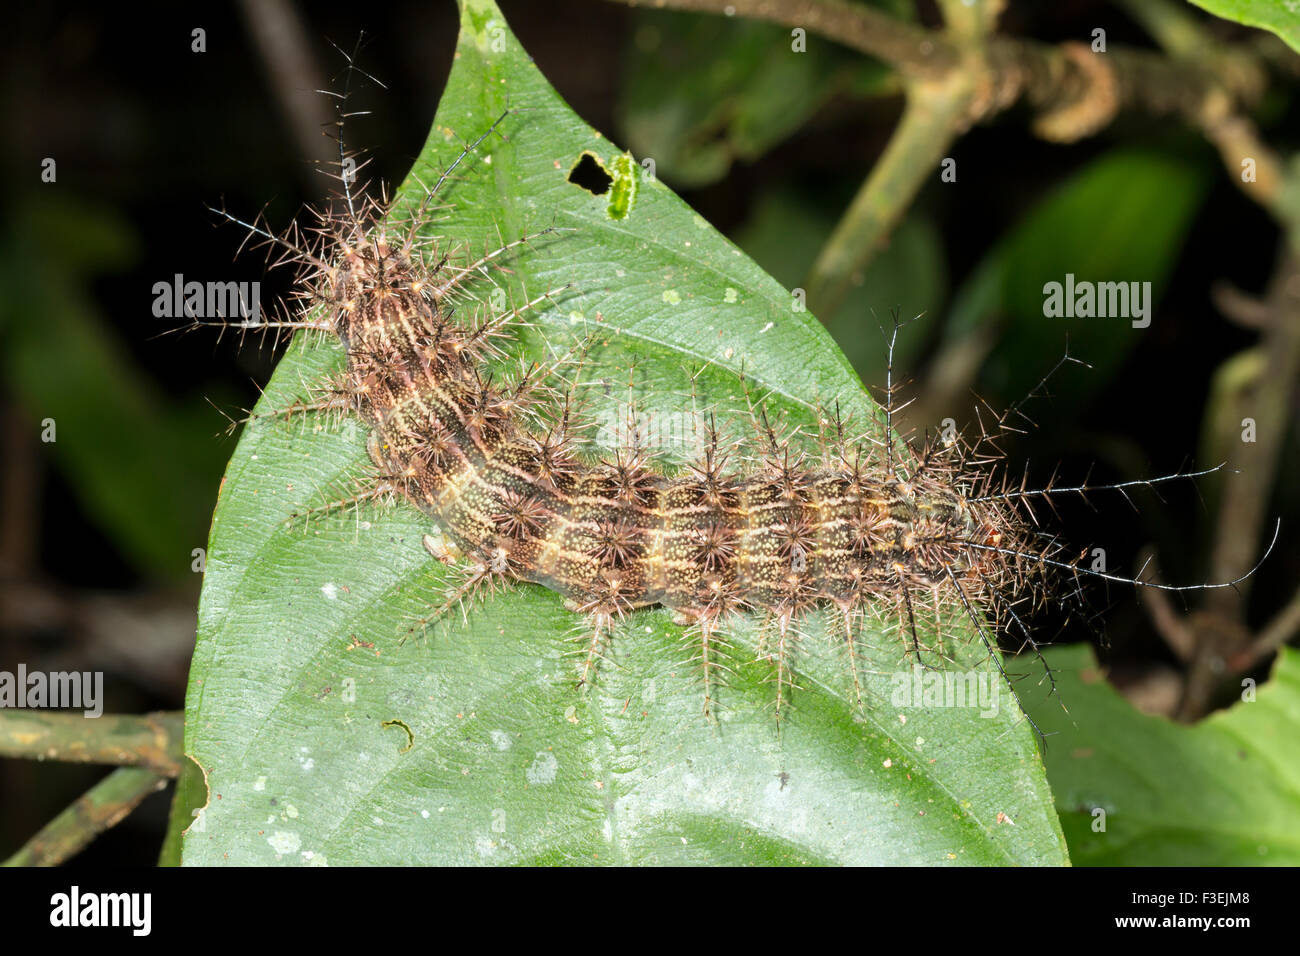 Larva of a moth, family Saturniidae with venomous stinging hairs in the rainforest, Ecuador Stock Photo